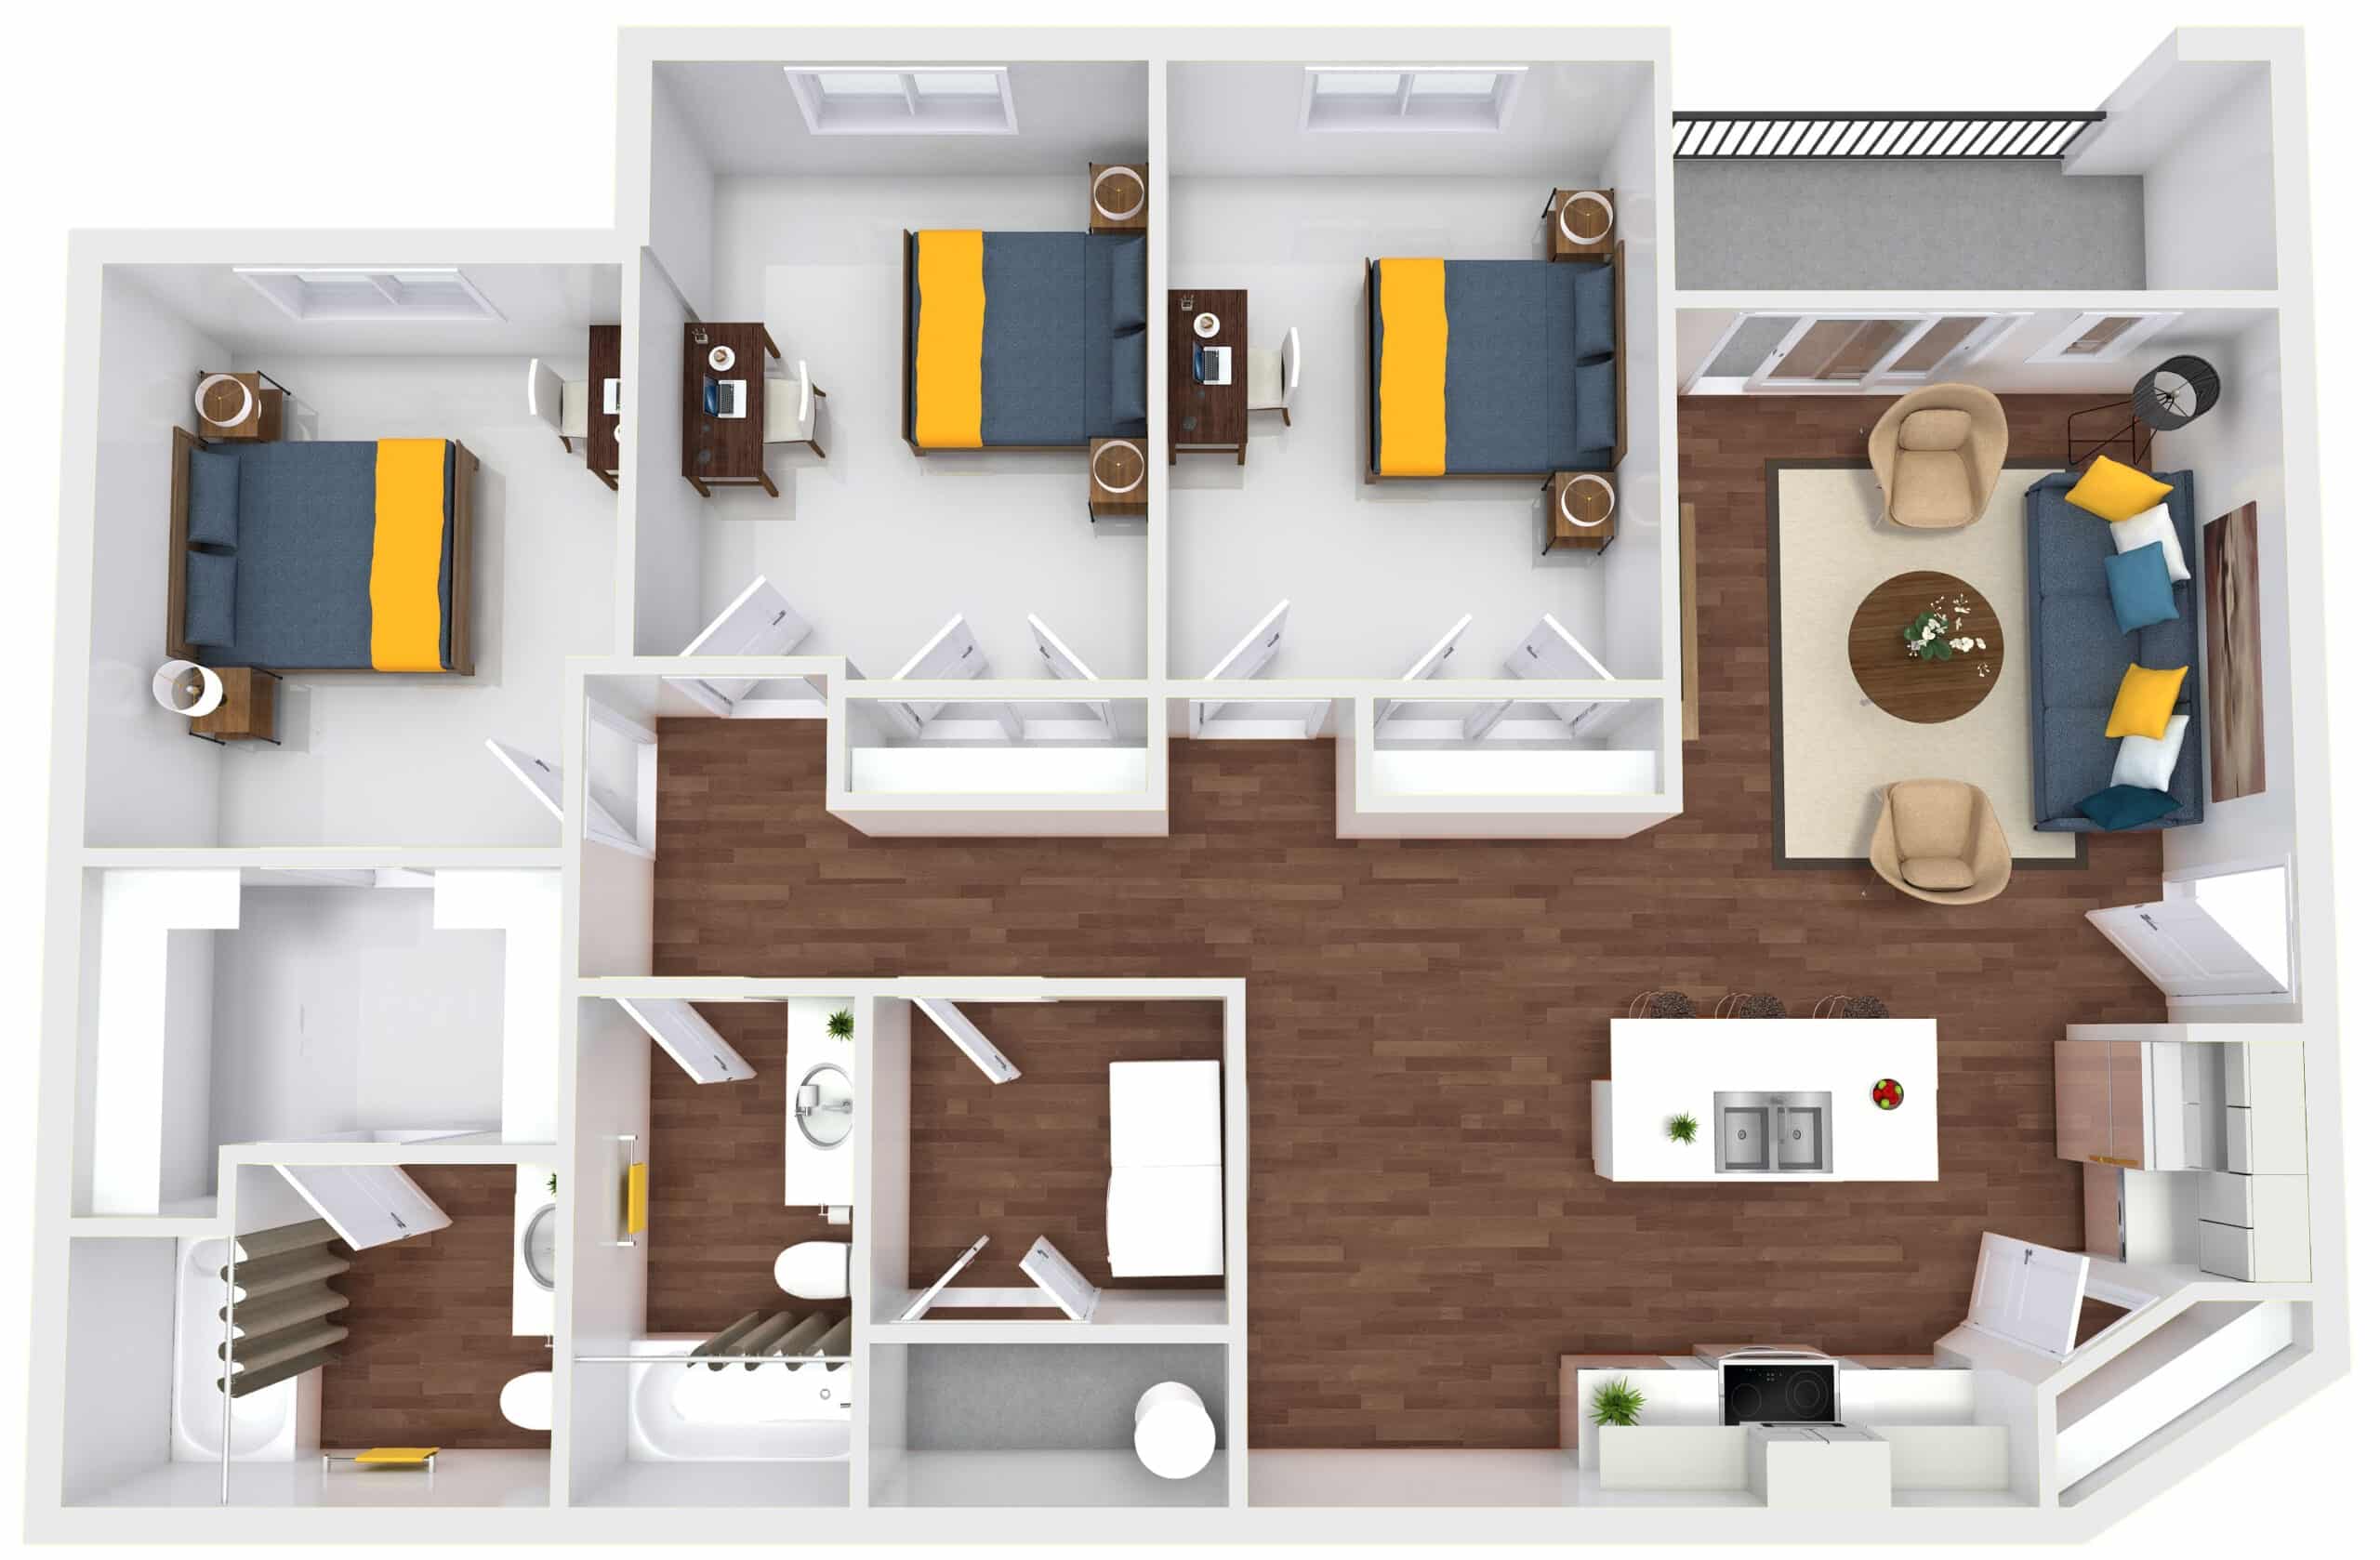 3 bed 2 bath apartment floor plan